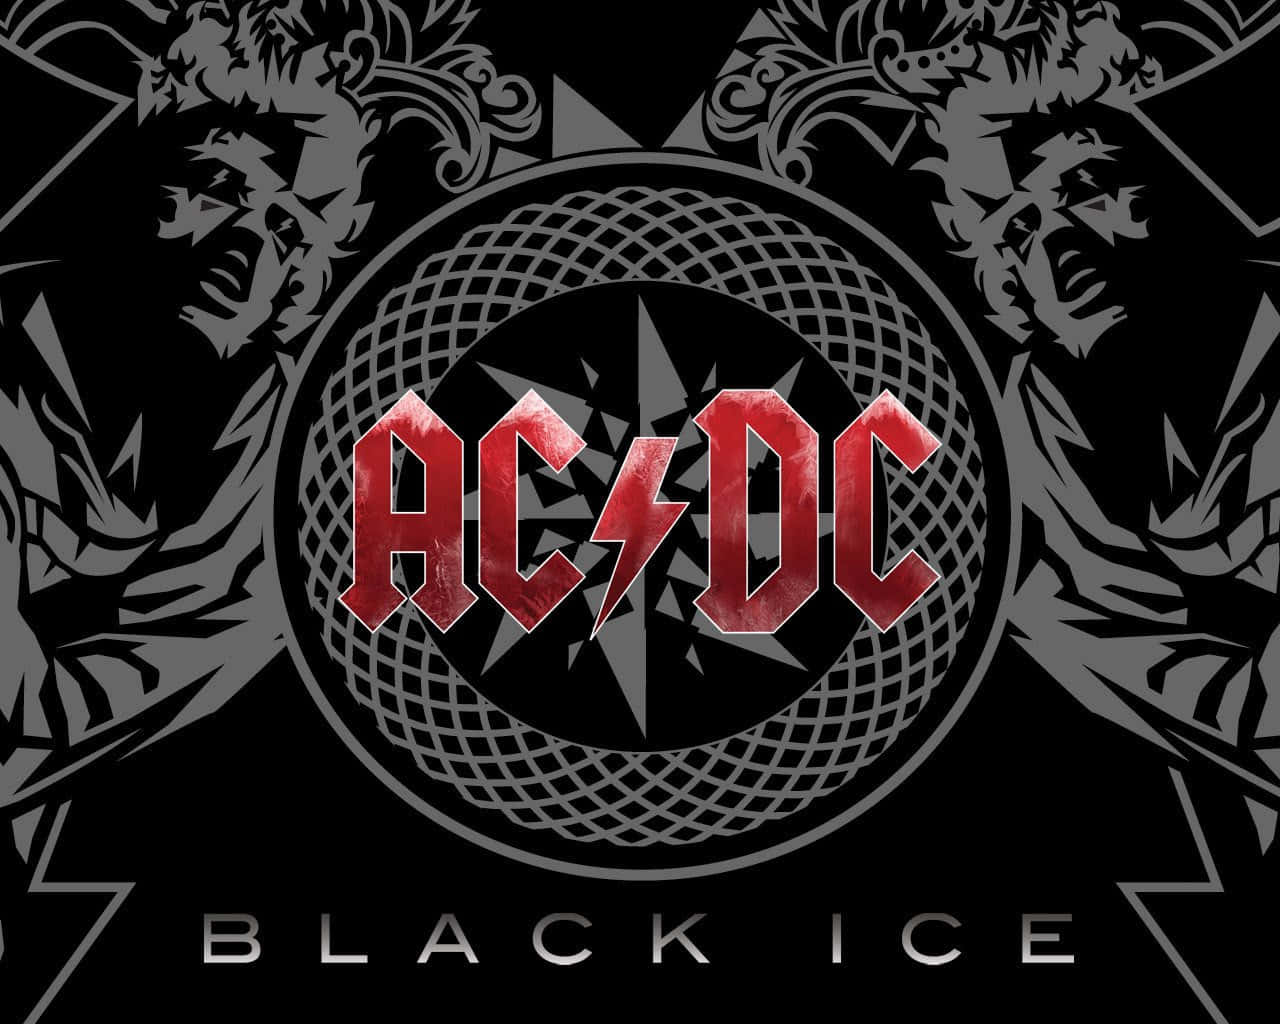 Legendary Rock Band AC/DC in Concert Wallpaper